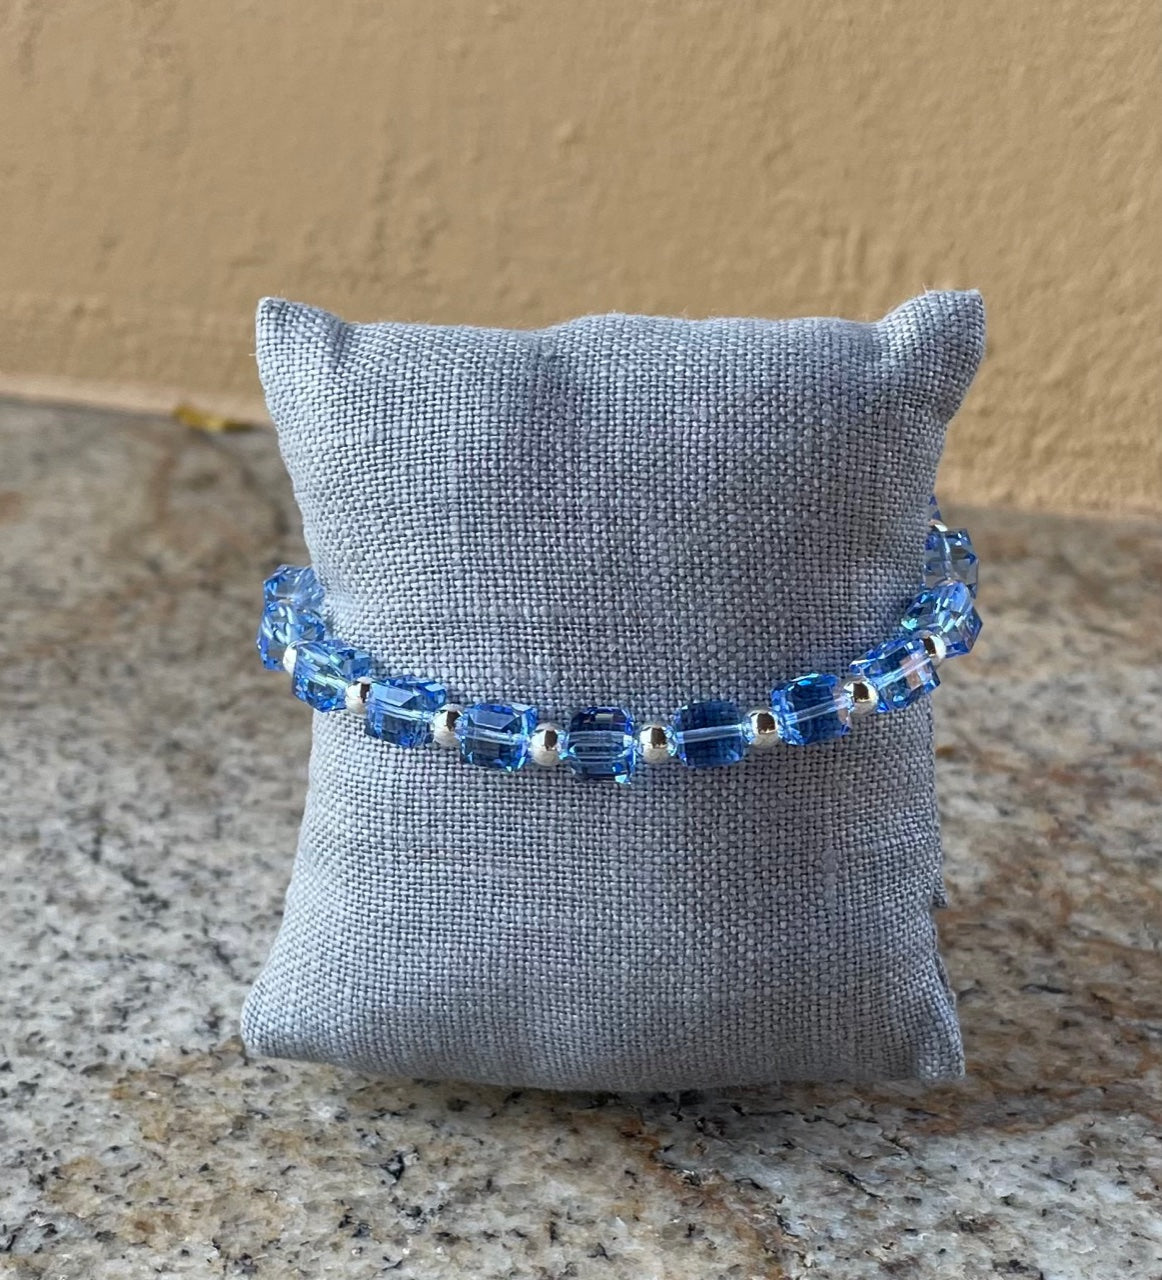 Bracelet - Light blue Swarovski crystal bracelet with sterling silver